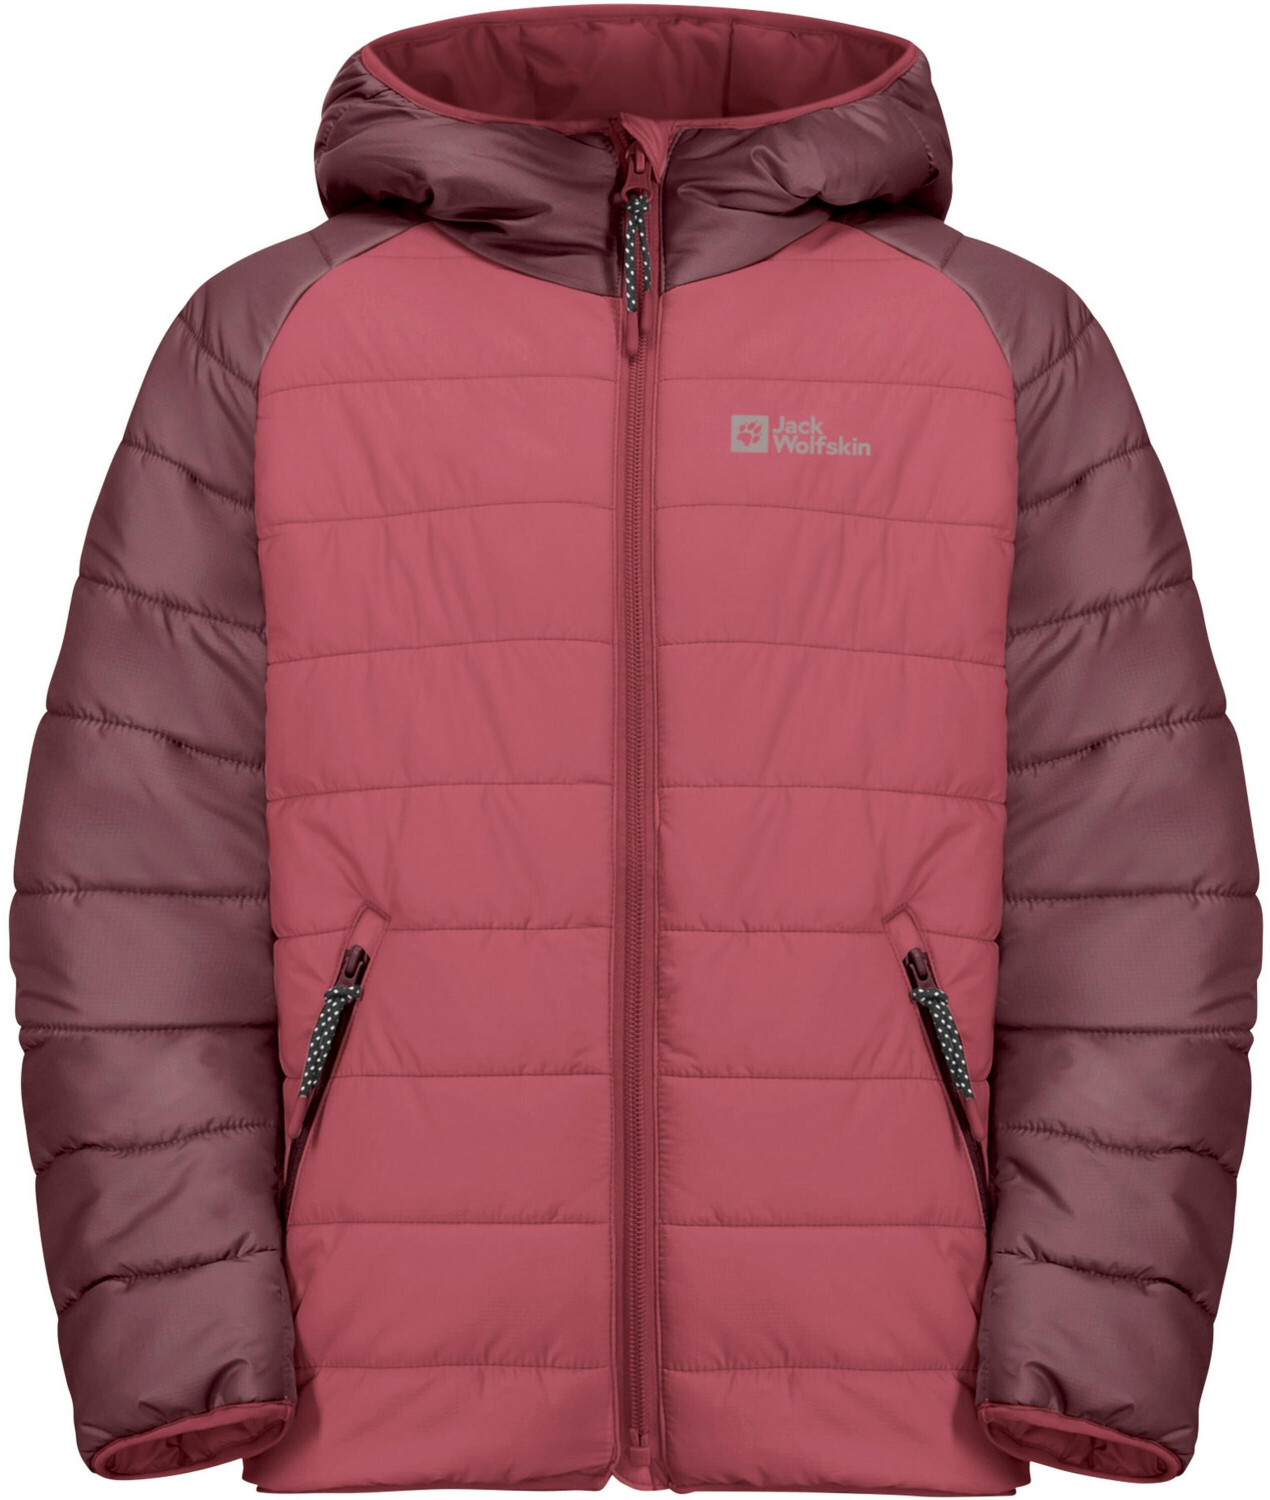 Jack Wolfskin Zenon Jacket Kids soft pink ab 46,25 € | Preisvergleich bei | Windbreakers